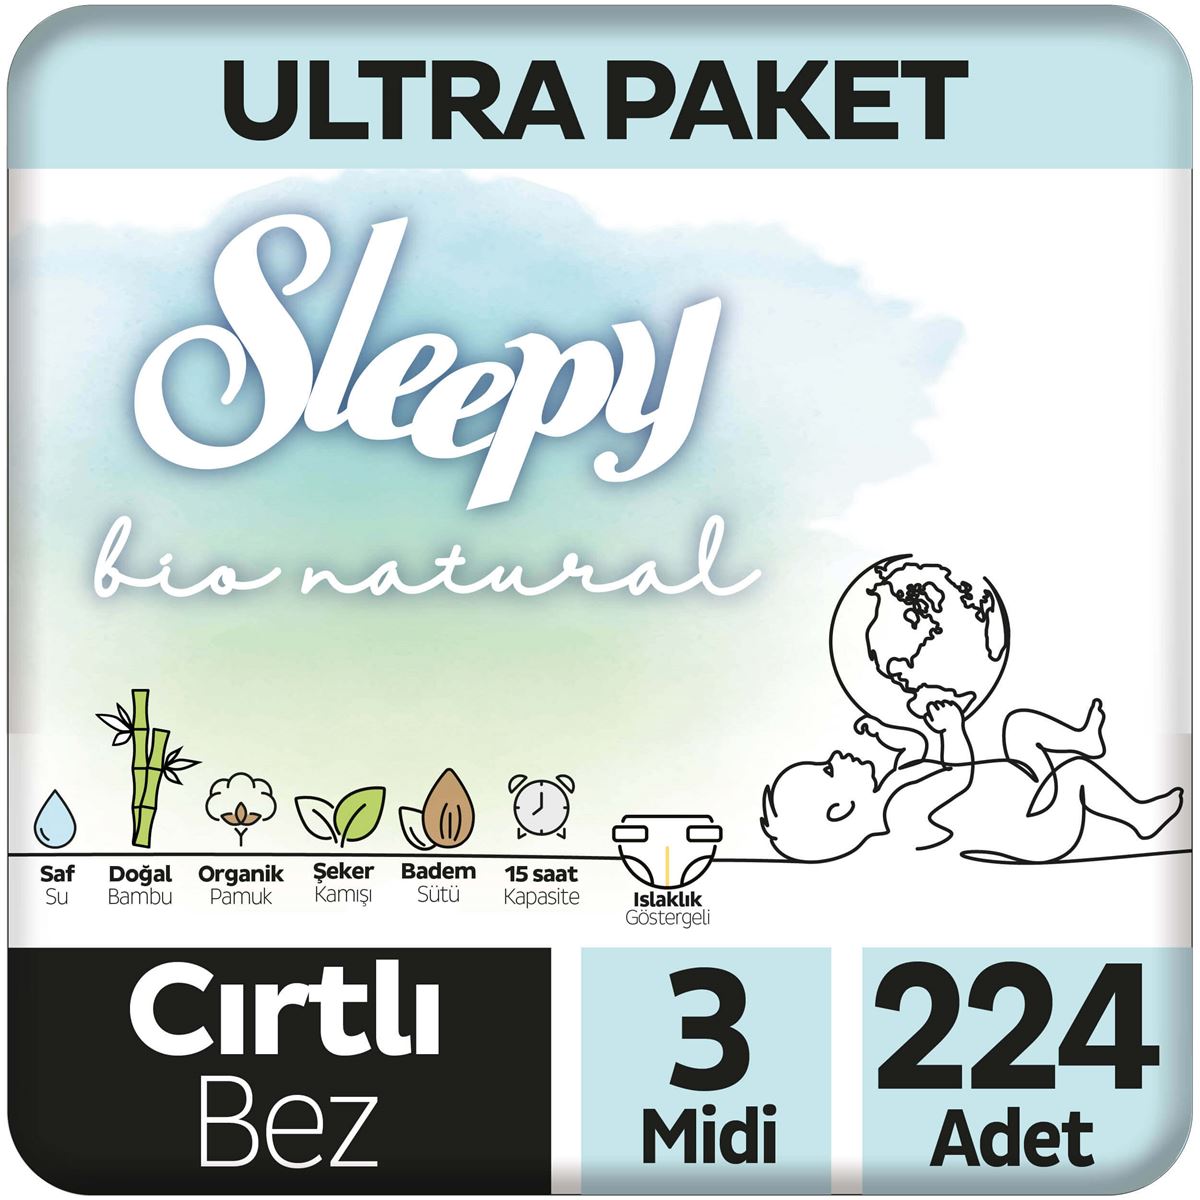 Sleepy Bio Natural Ultra Paket Bebek Bezi 3 Numara Midi 224 Adet